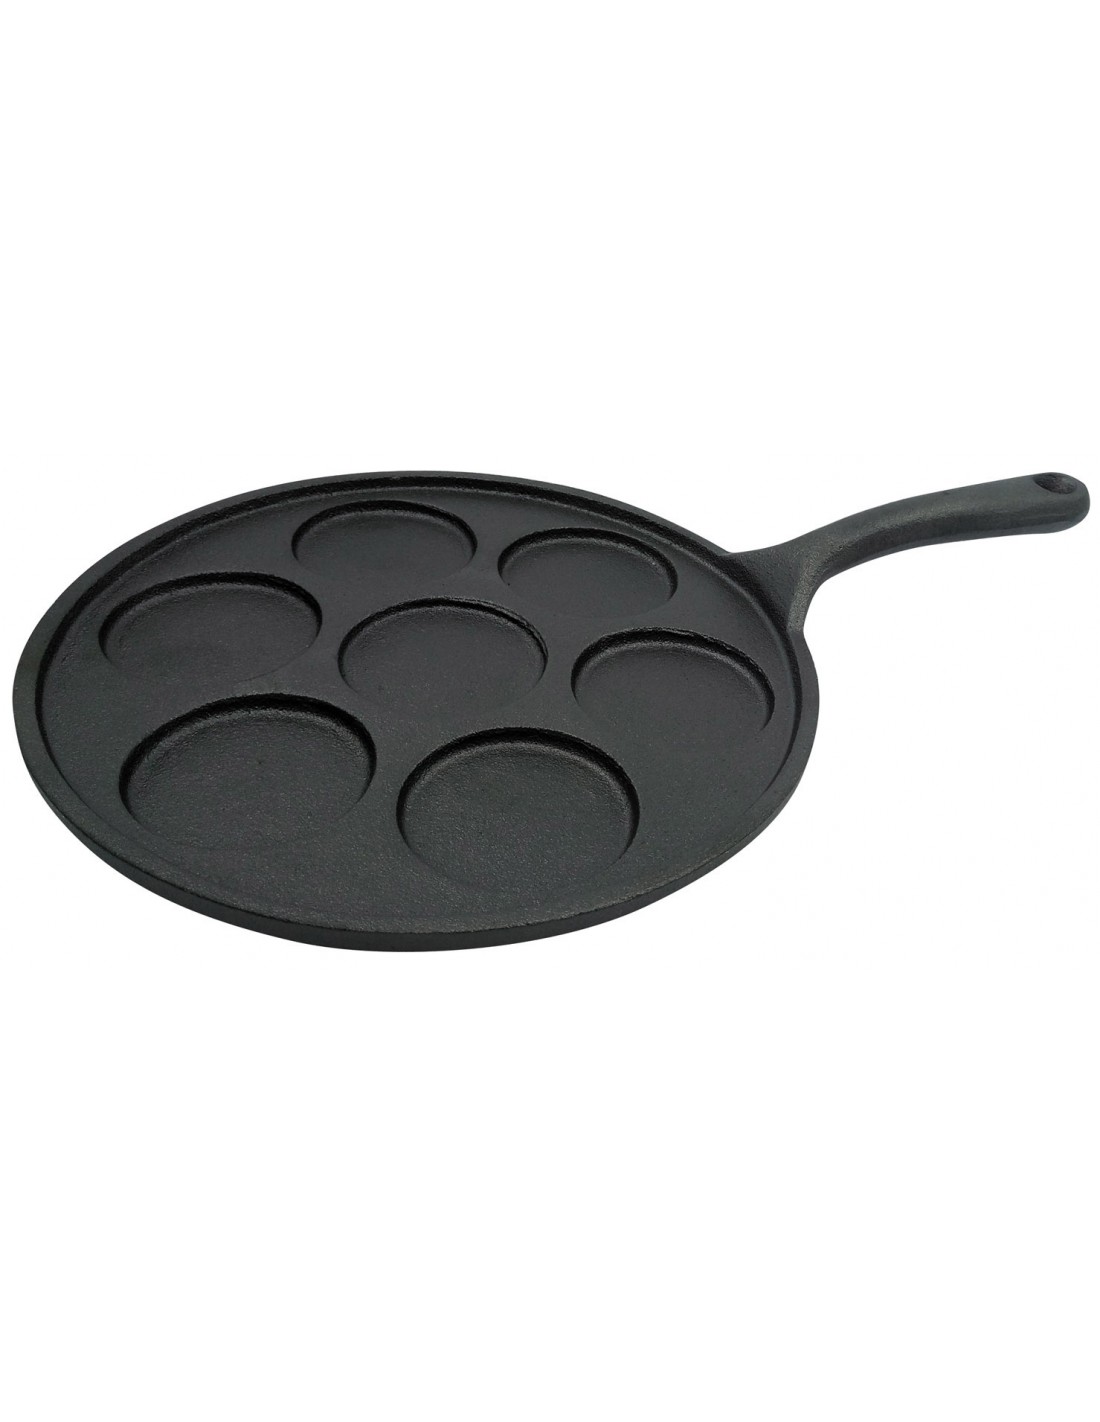 Cast Iron Cake Pan  Cast iron cooking, Cast iron cookware